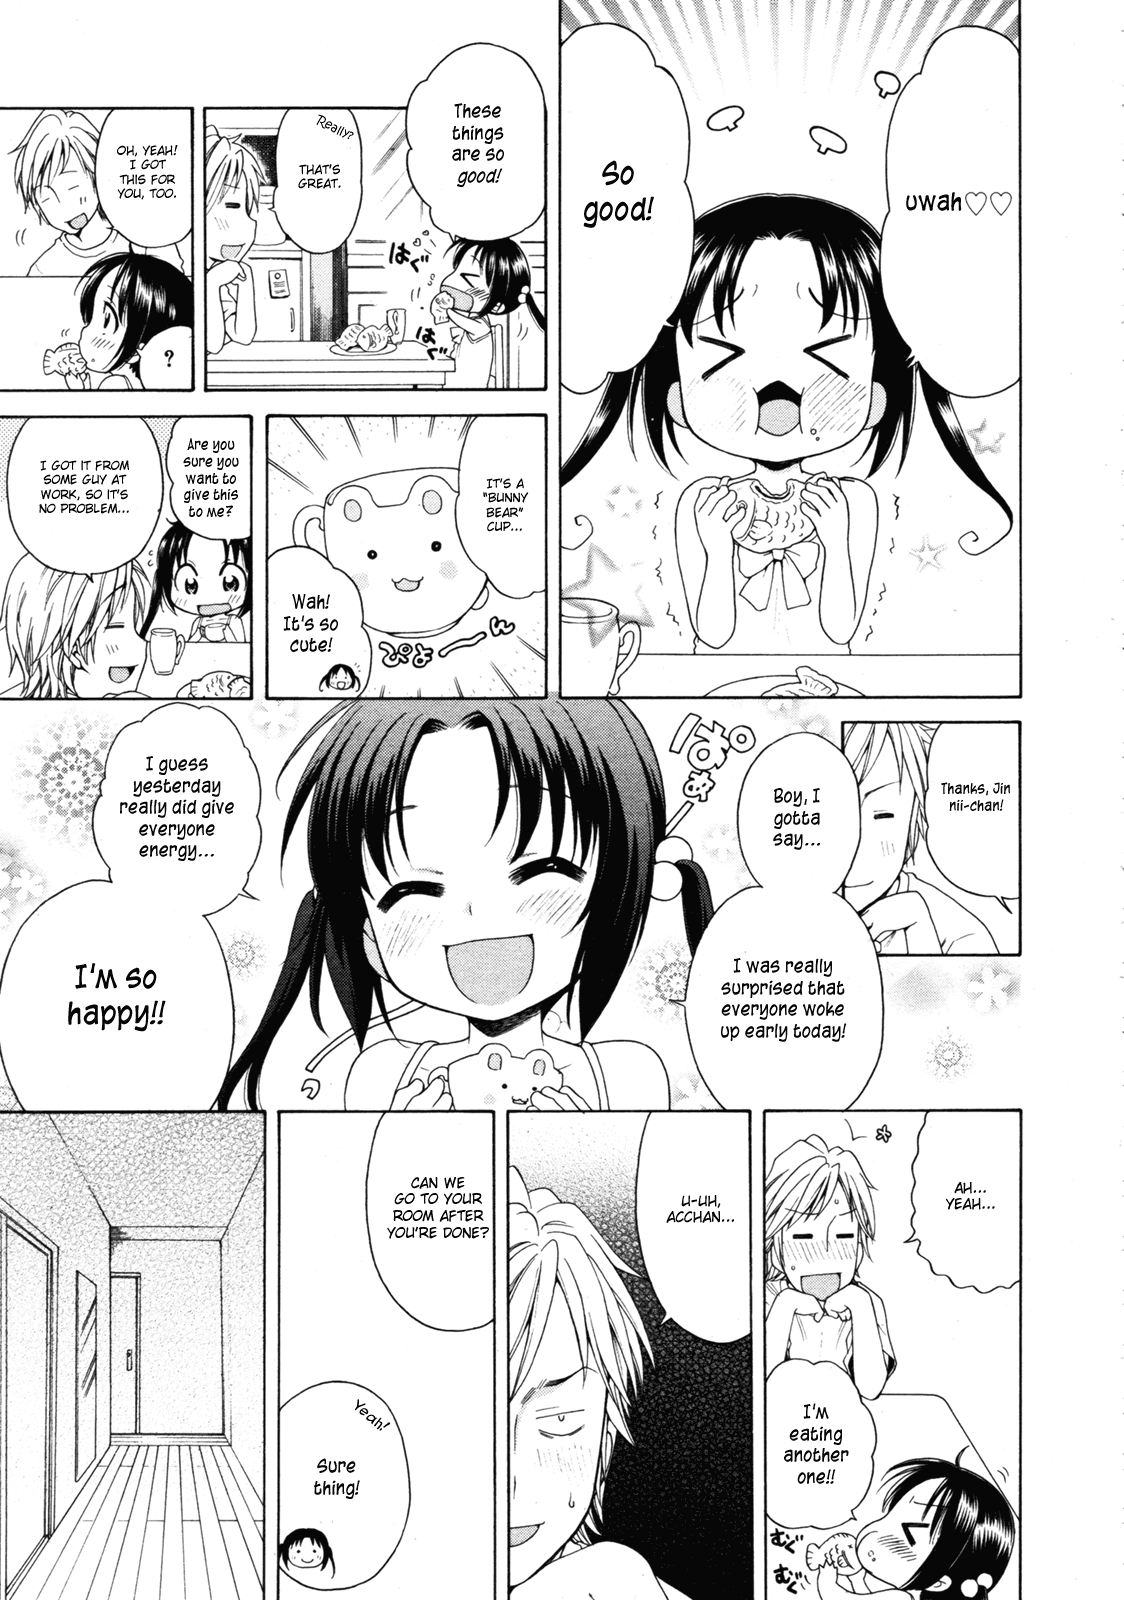 The Light of Tsukimi Manor 1-6 hentai manga picture 34